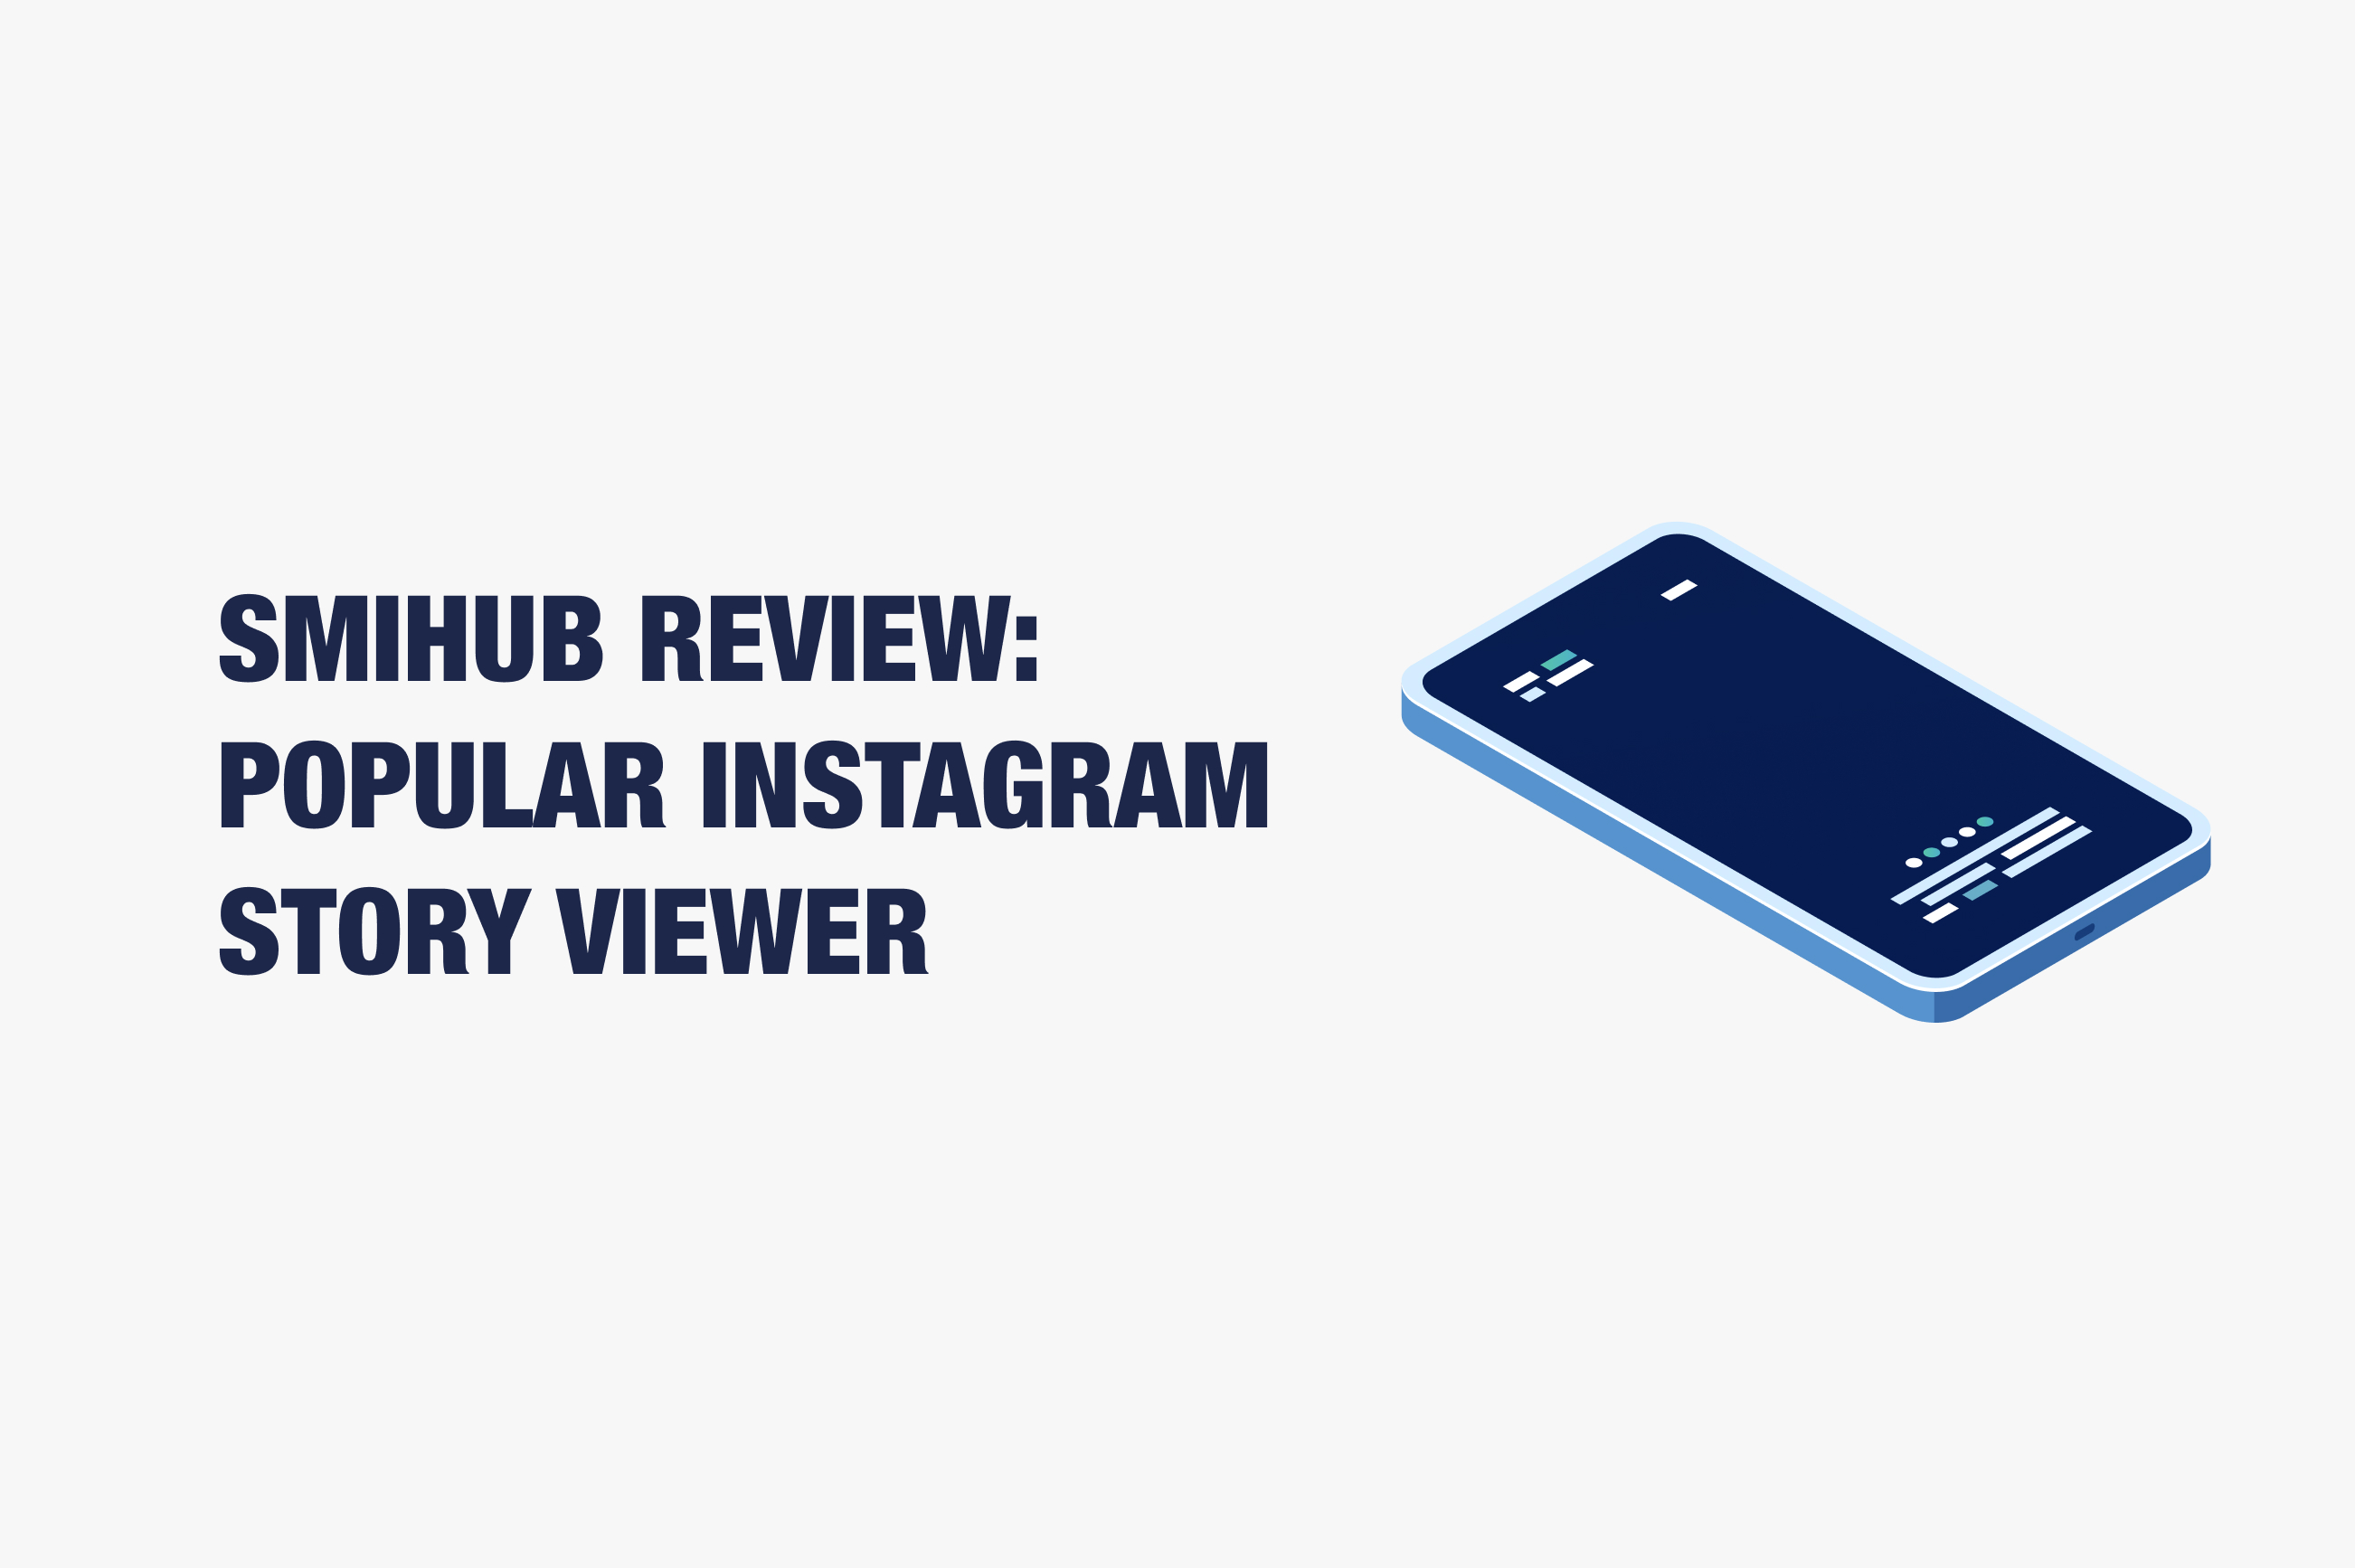 SmiHub Review: Popular Instagram Story Viewer